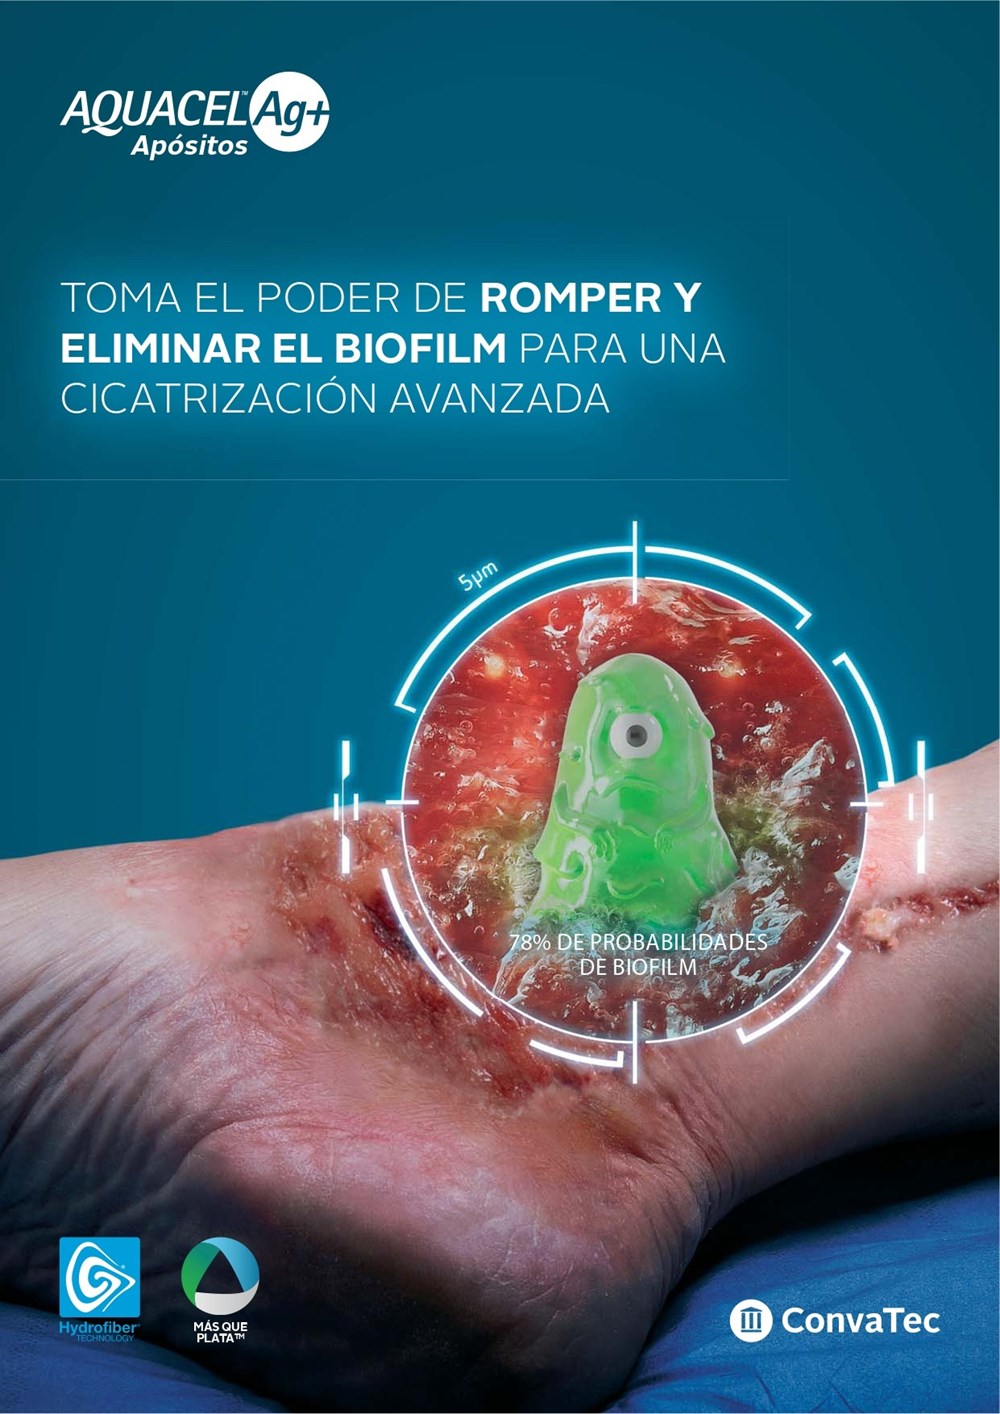 Portada 2 / Cover 2 Nueva Campaña Ag+ 2019/ New Campaign Ag+2019 - Español/ Spanish